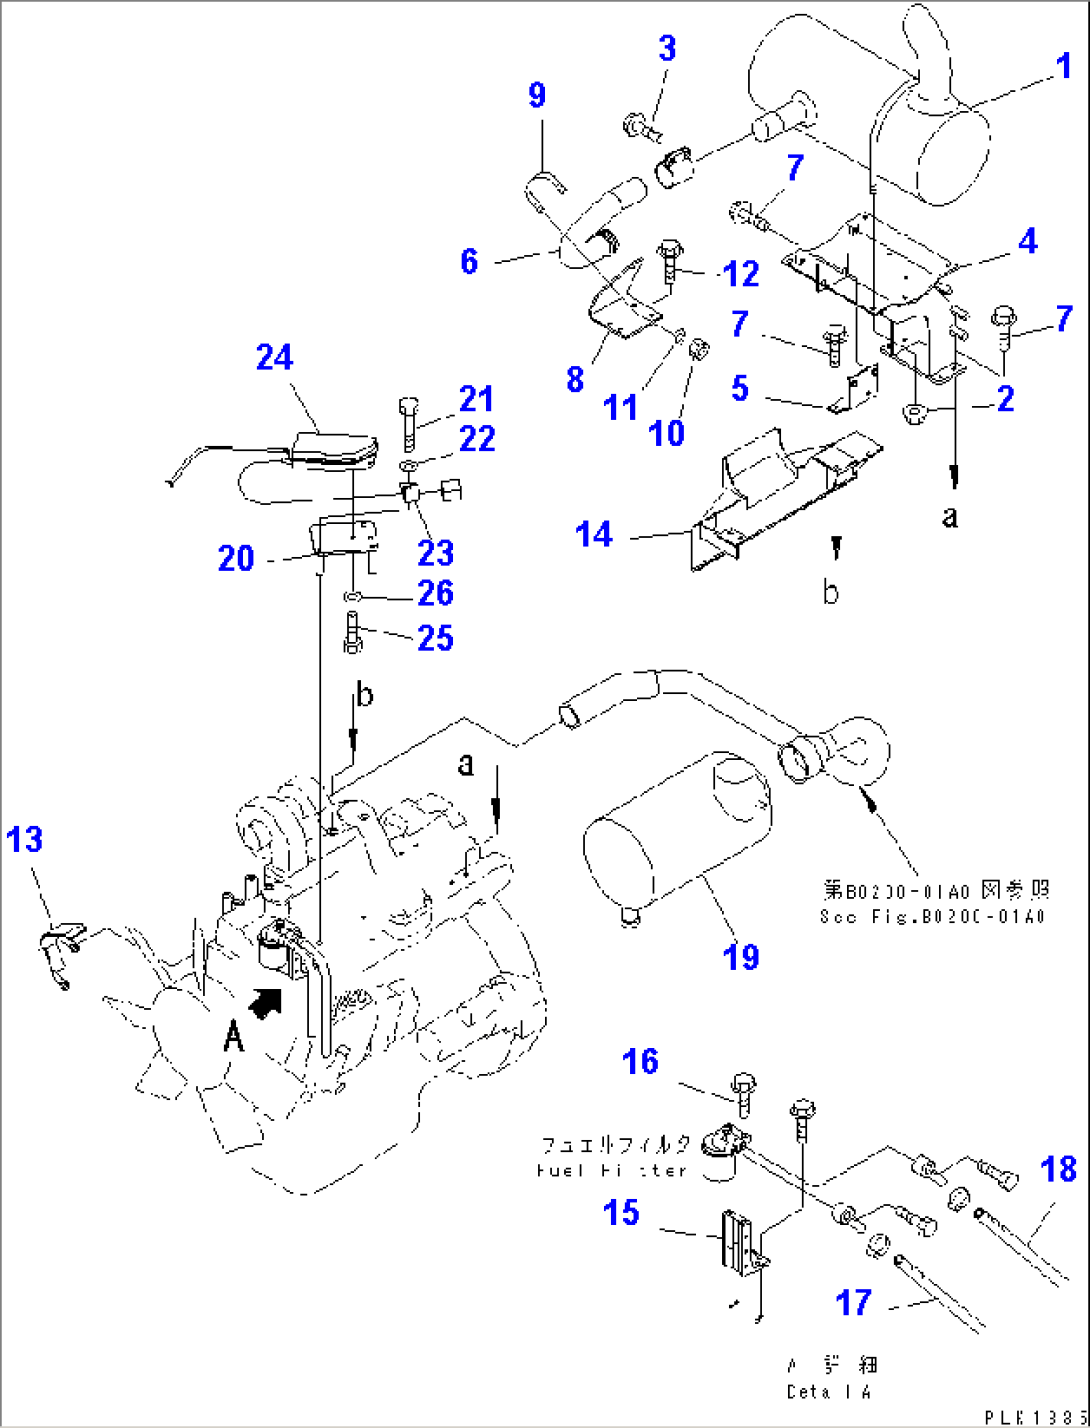 ENGINE ACCESSORIES PARTS(#1033-1800)